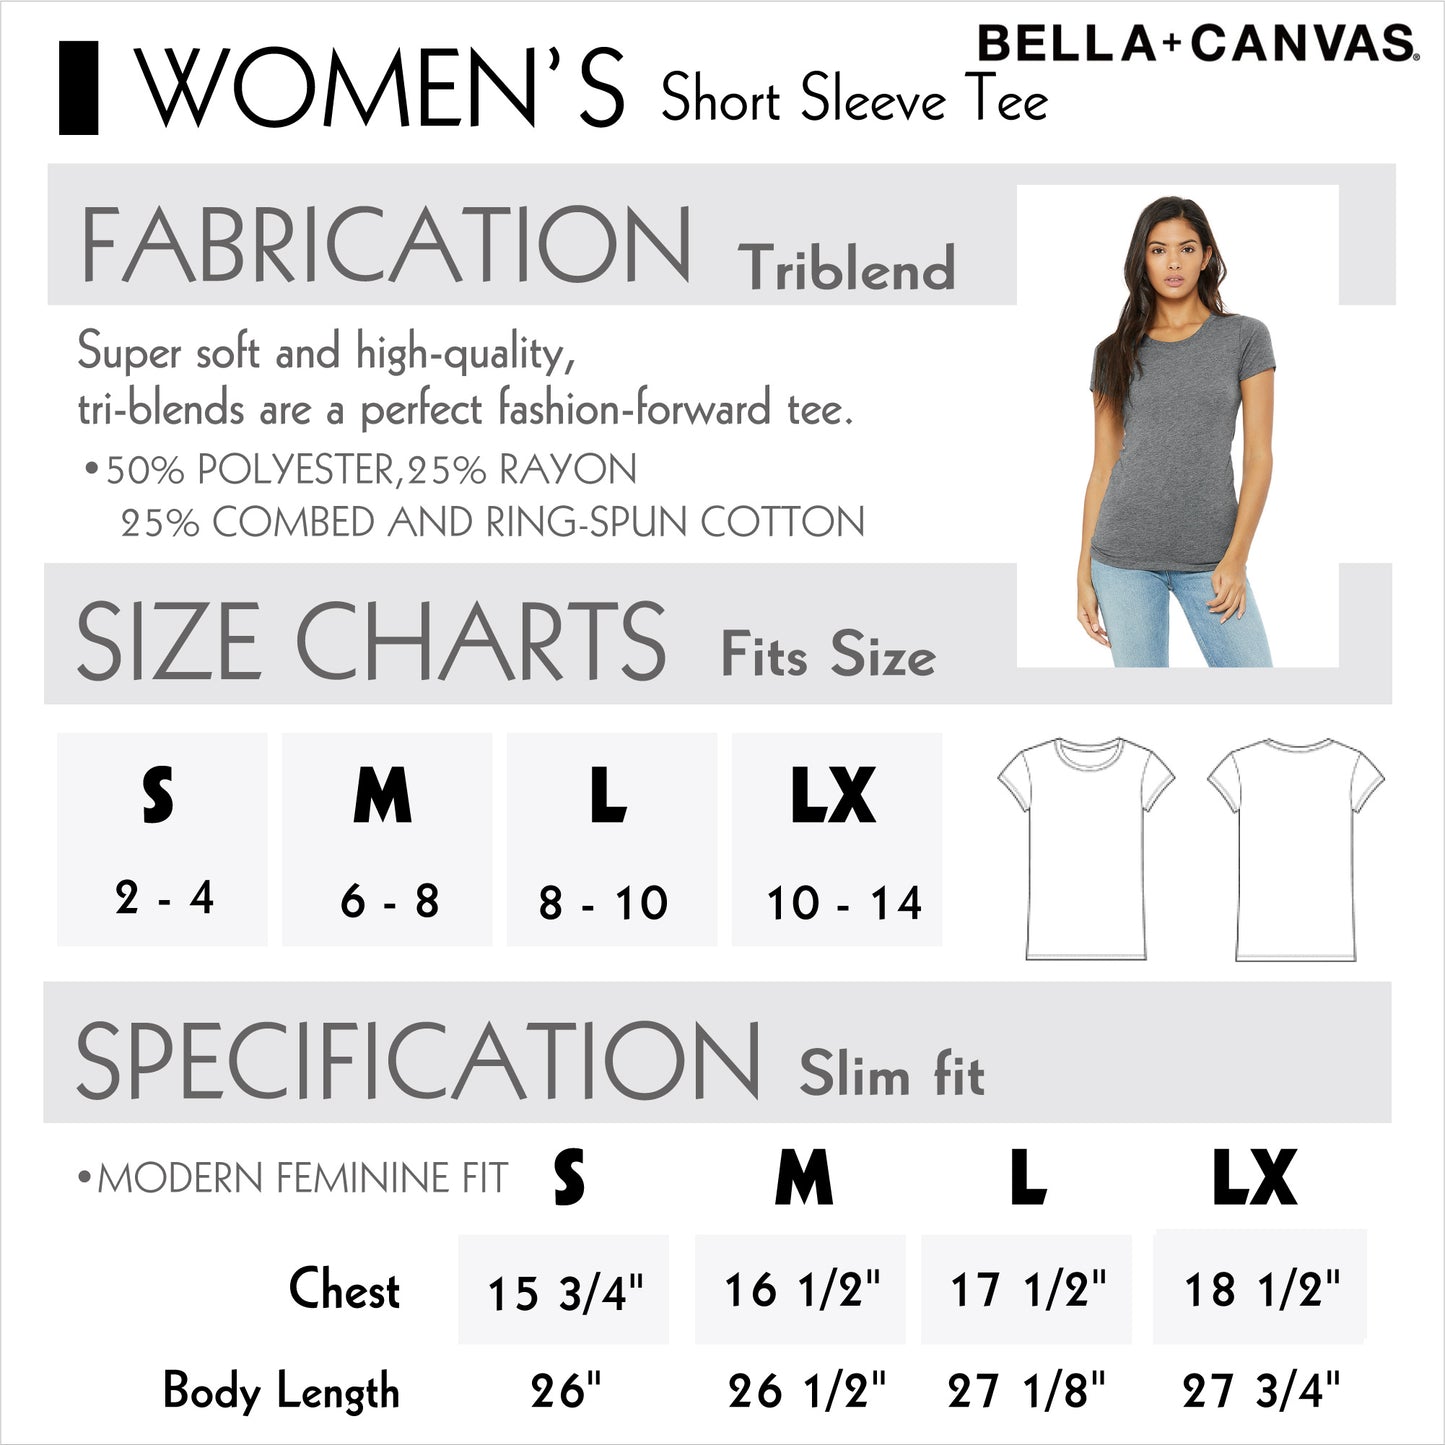 Bella Canvas Triblend women's tee sizes